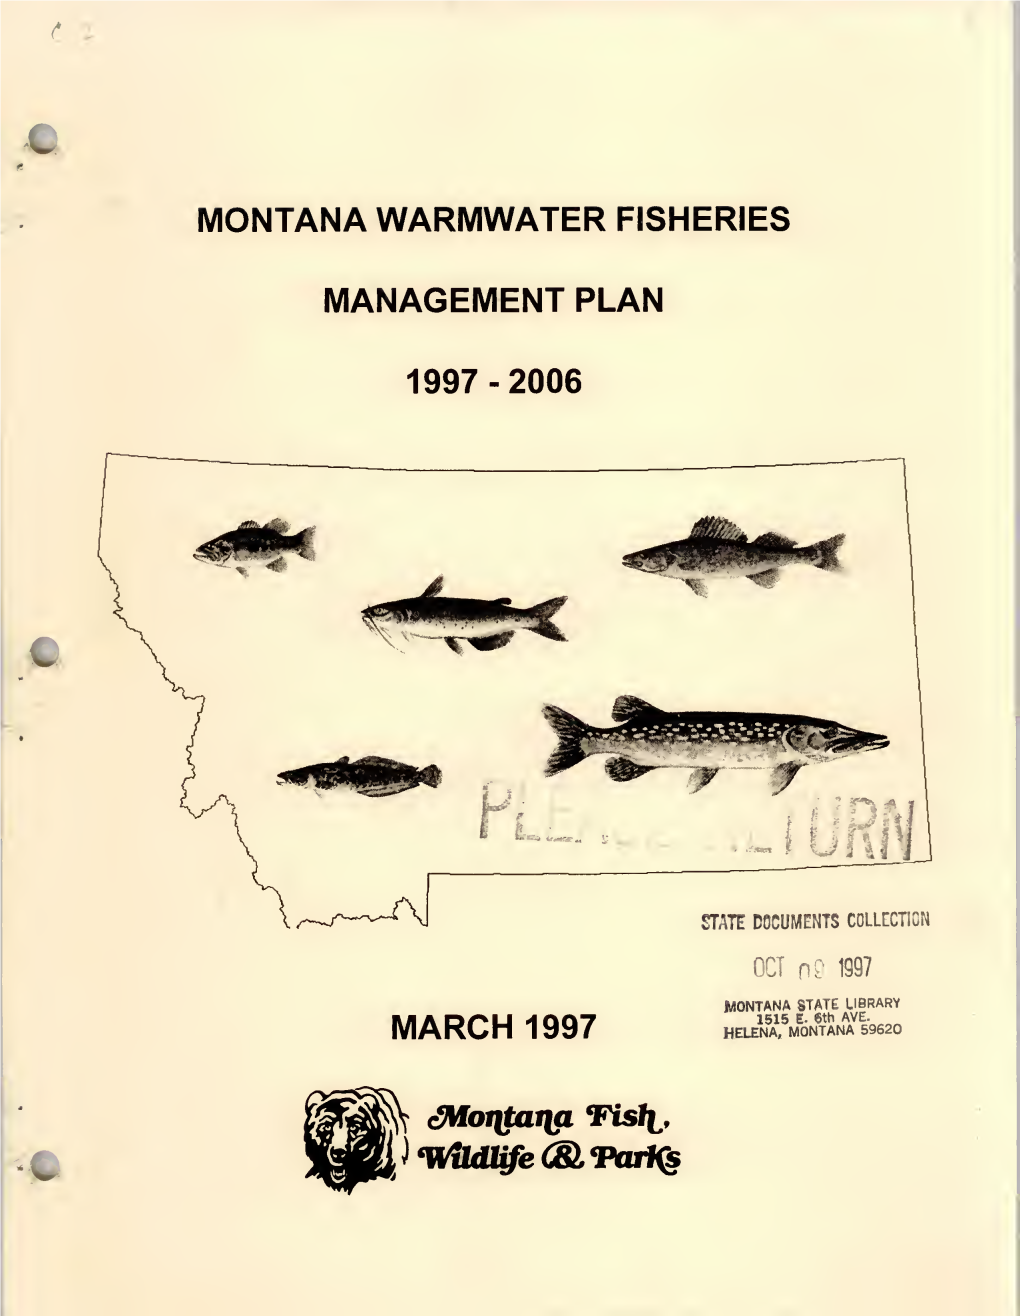 Montana Warmwater Fisheries Management Plan 1997-2006